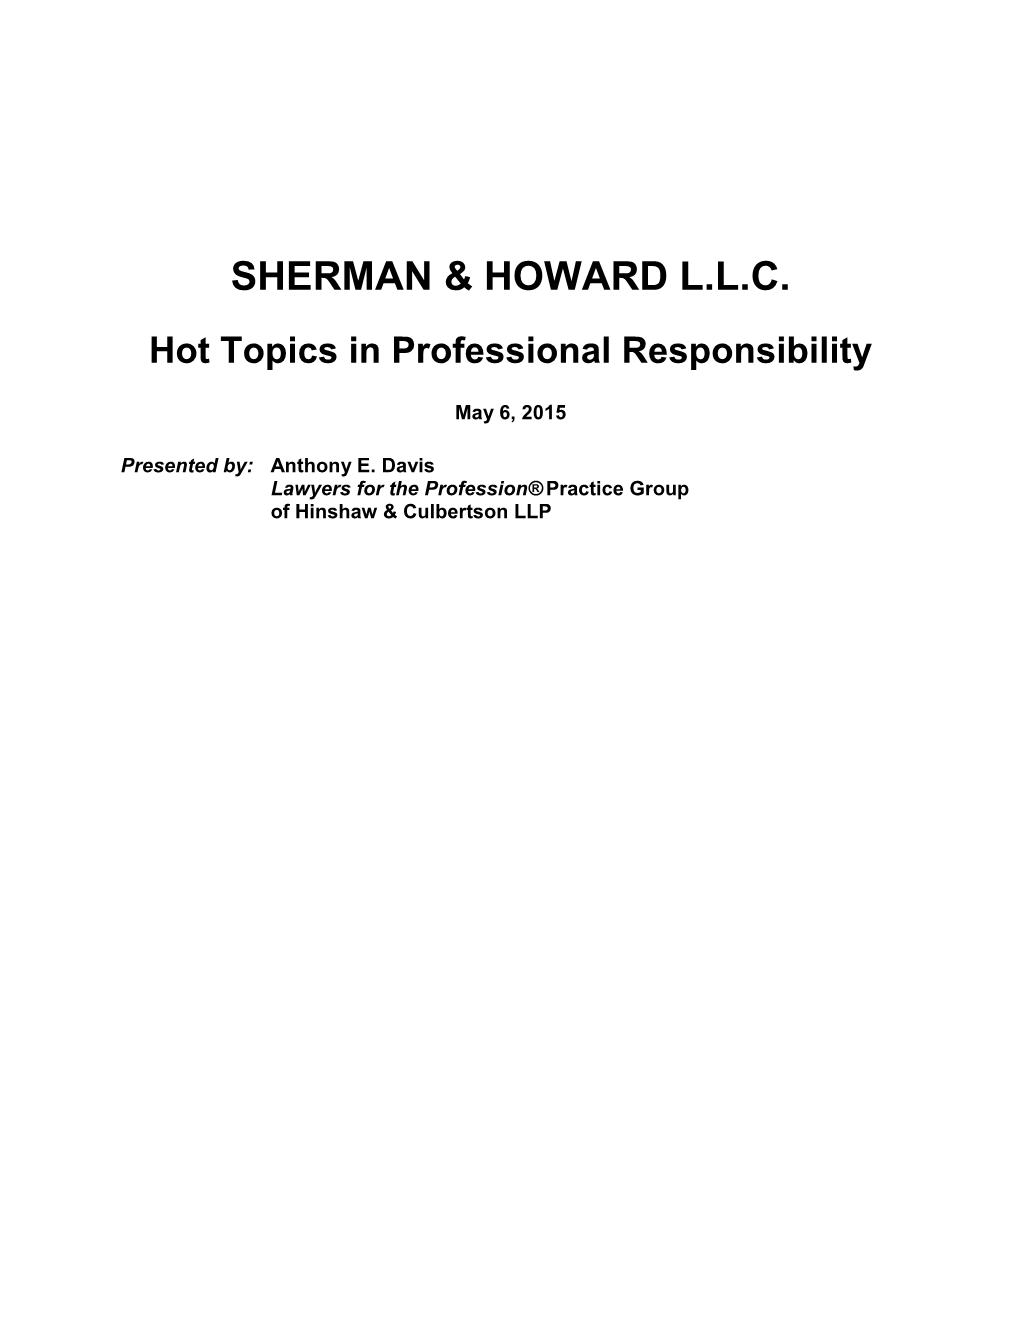 SHERMAN & HOWARD LLC Hot Topics in Professional Responsibility